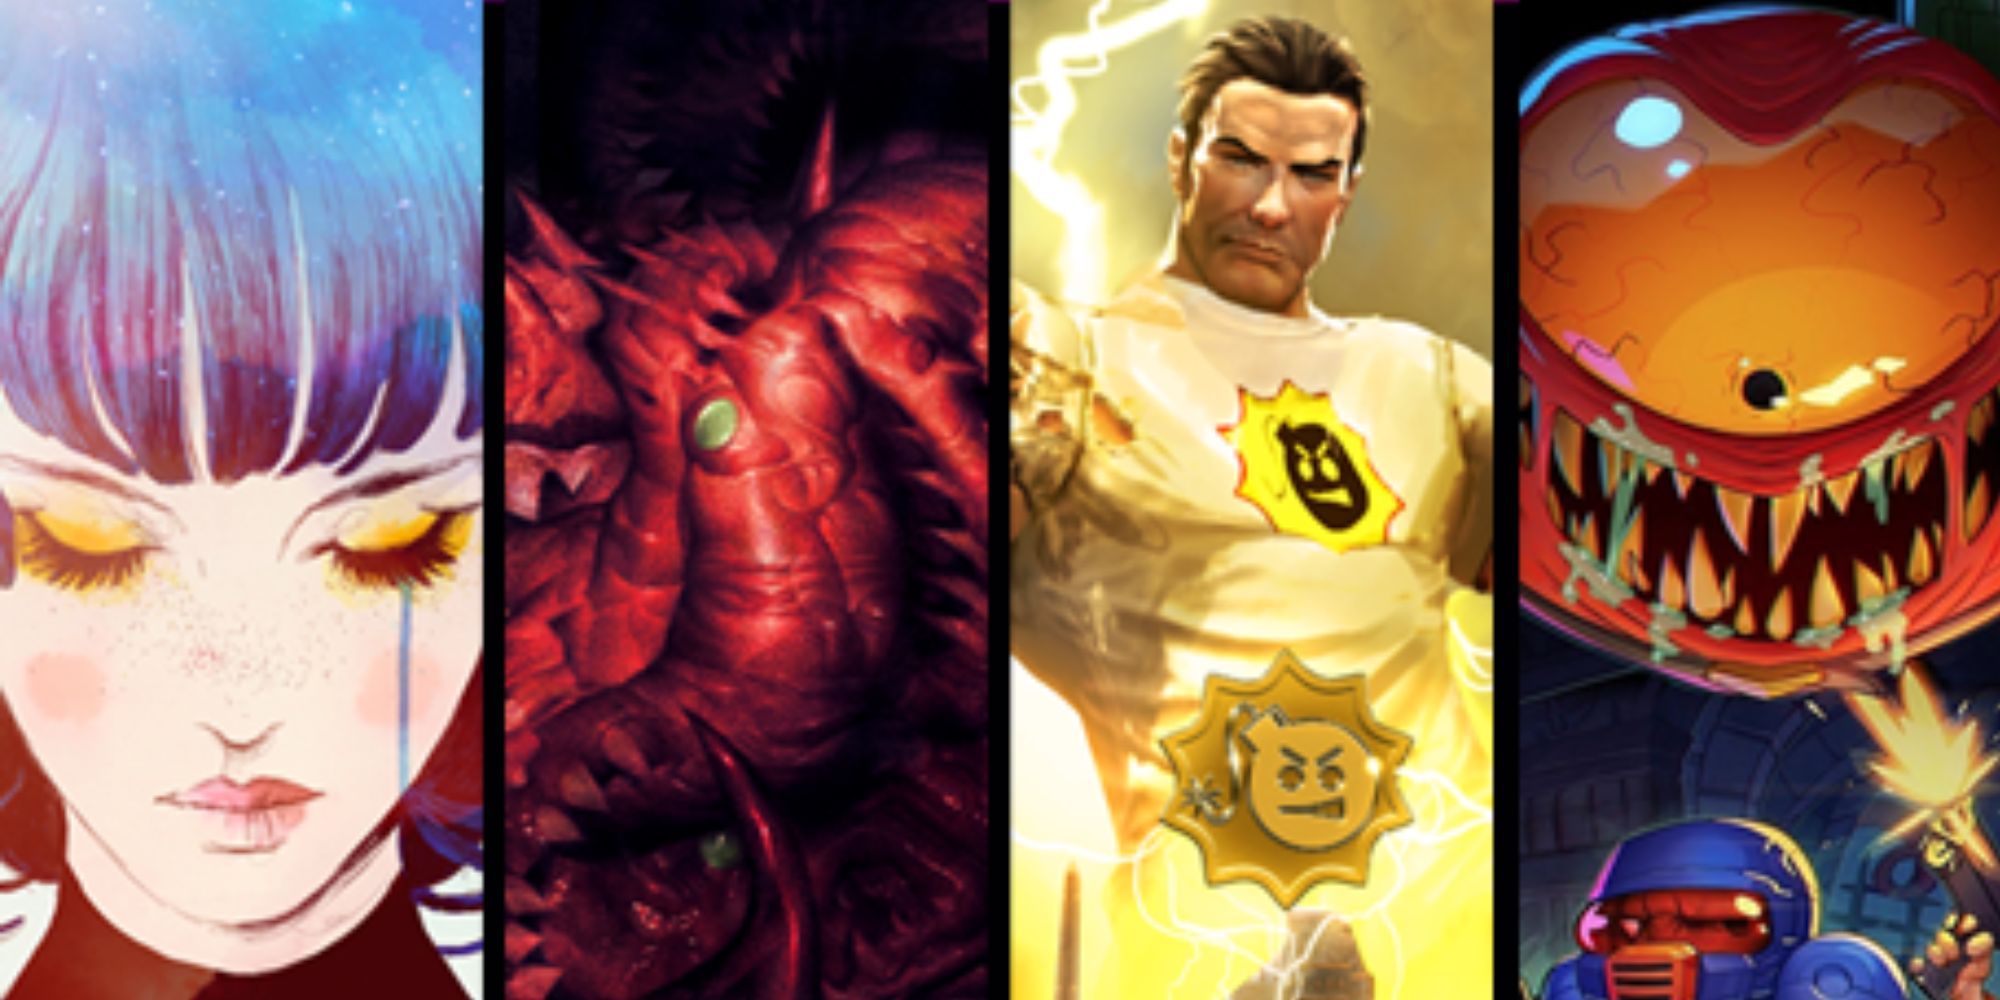 Image shows games by Devolver Digital.